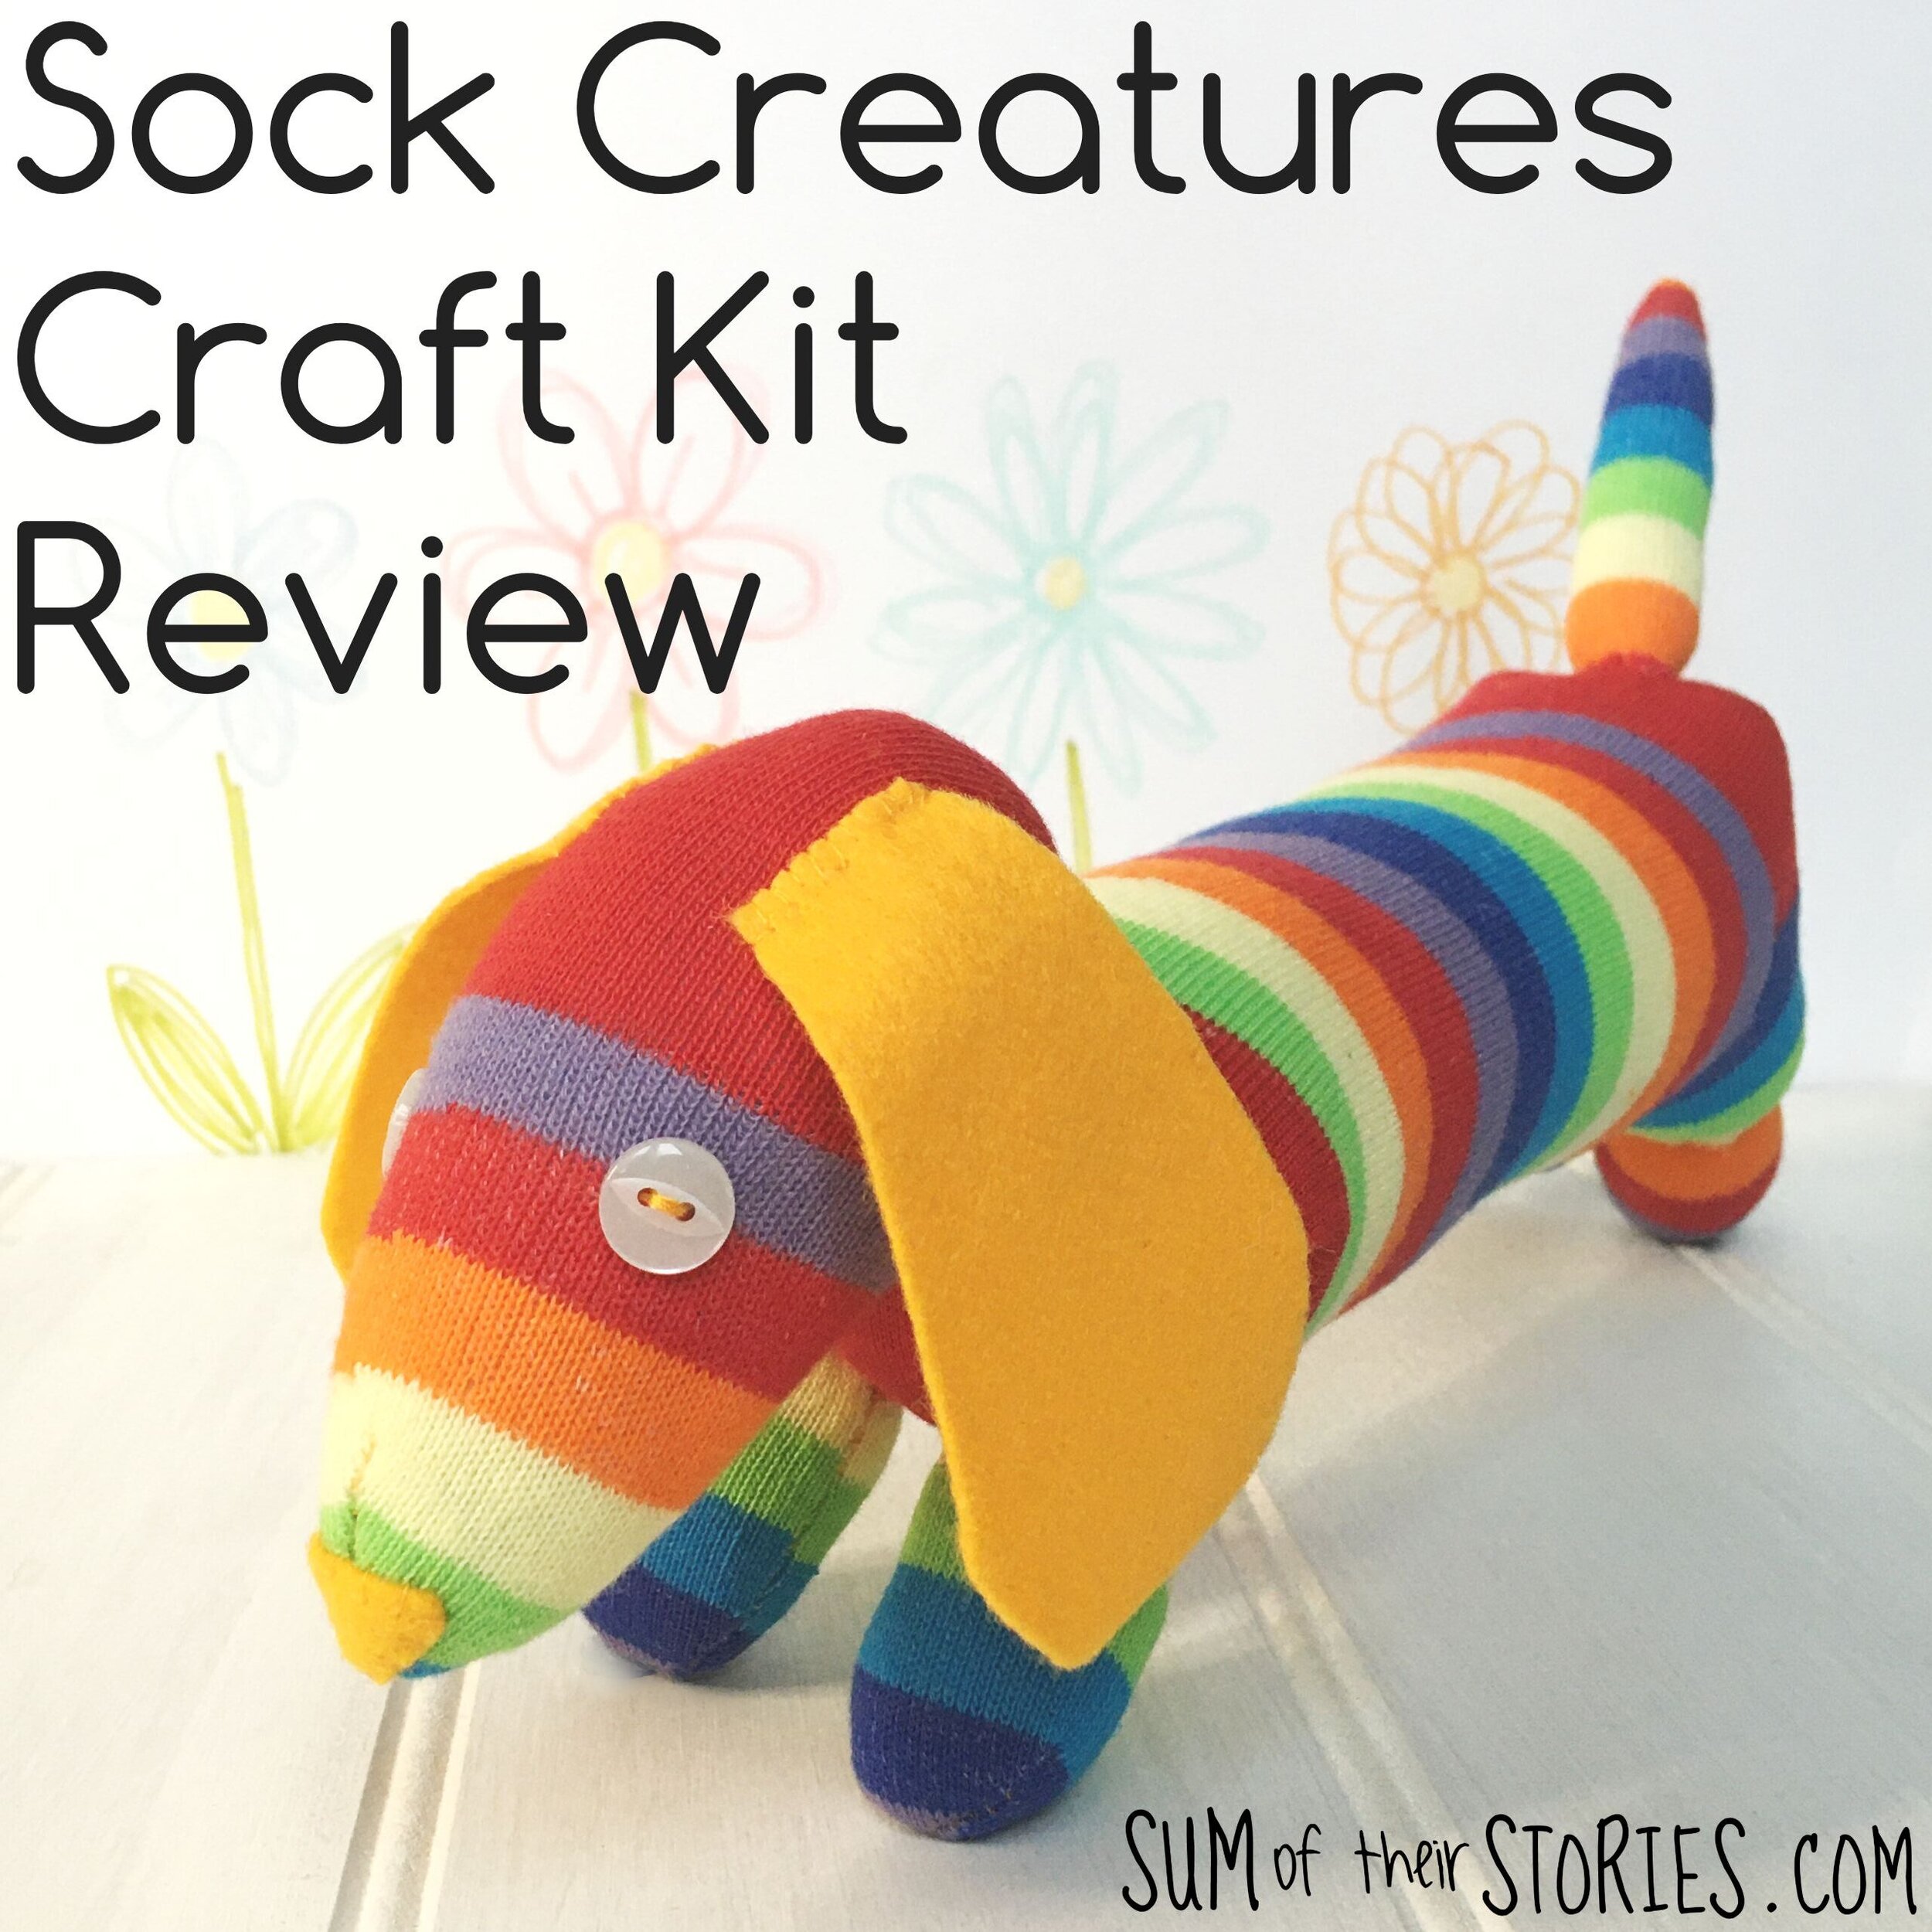 Blog - Kit's Crafts